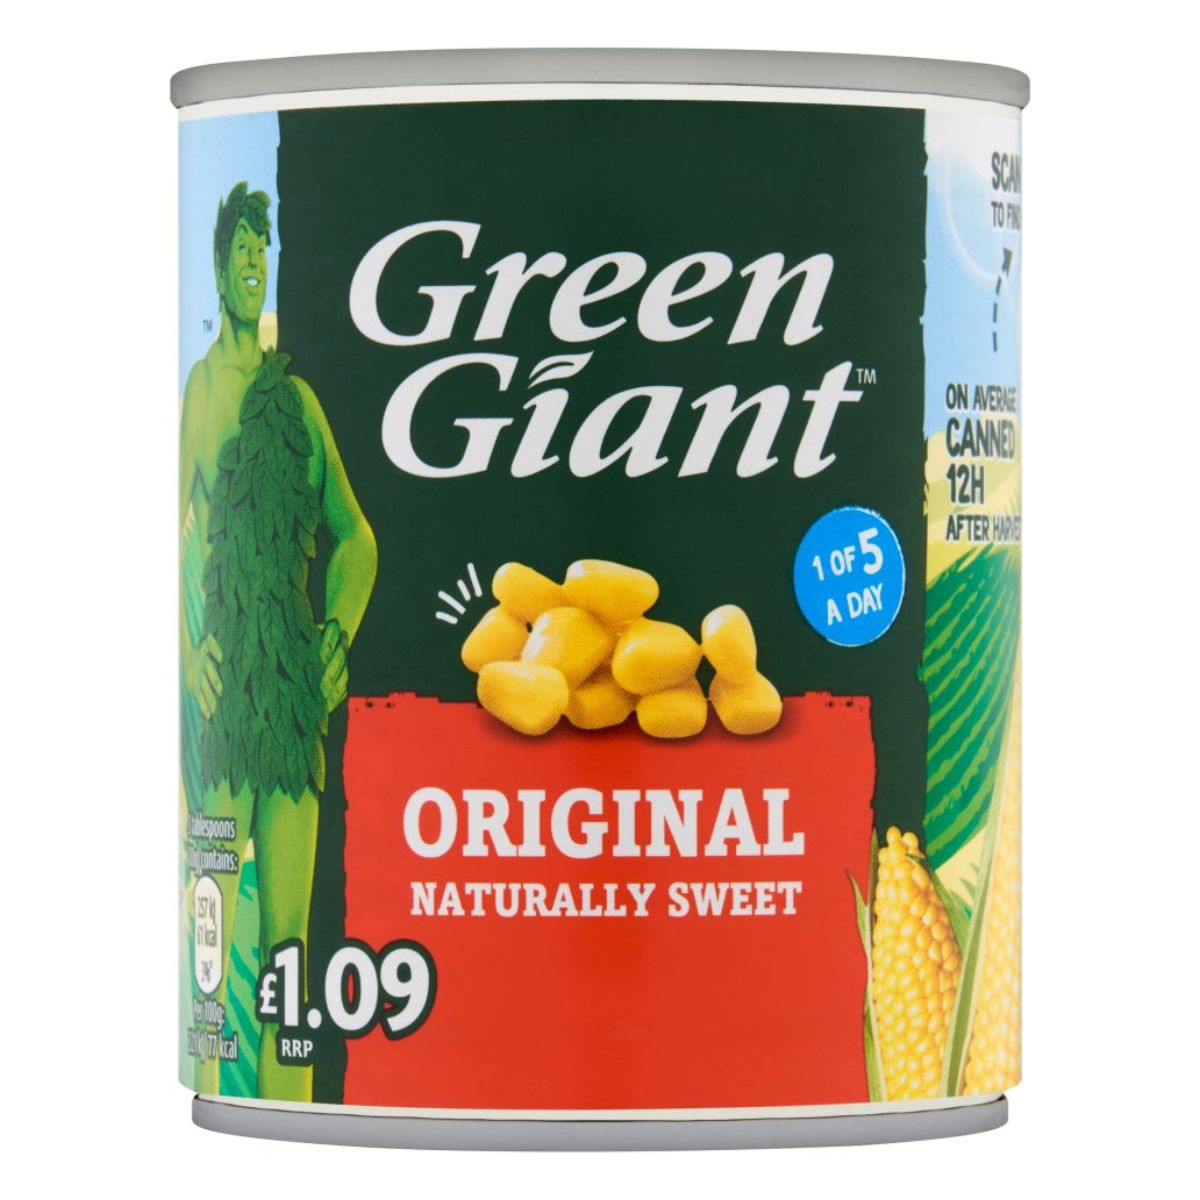 Green Giant - Original - 198g, naturally sweet.